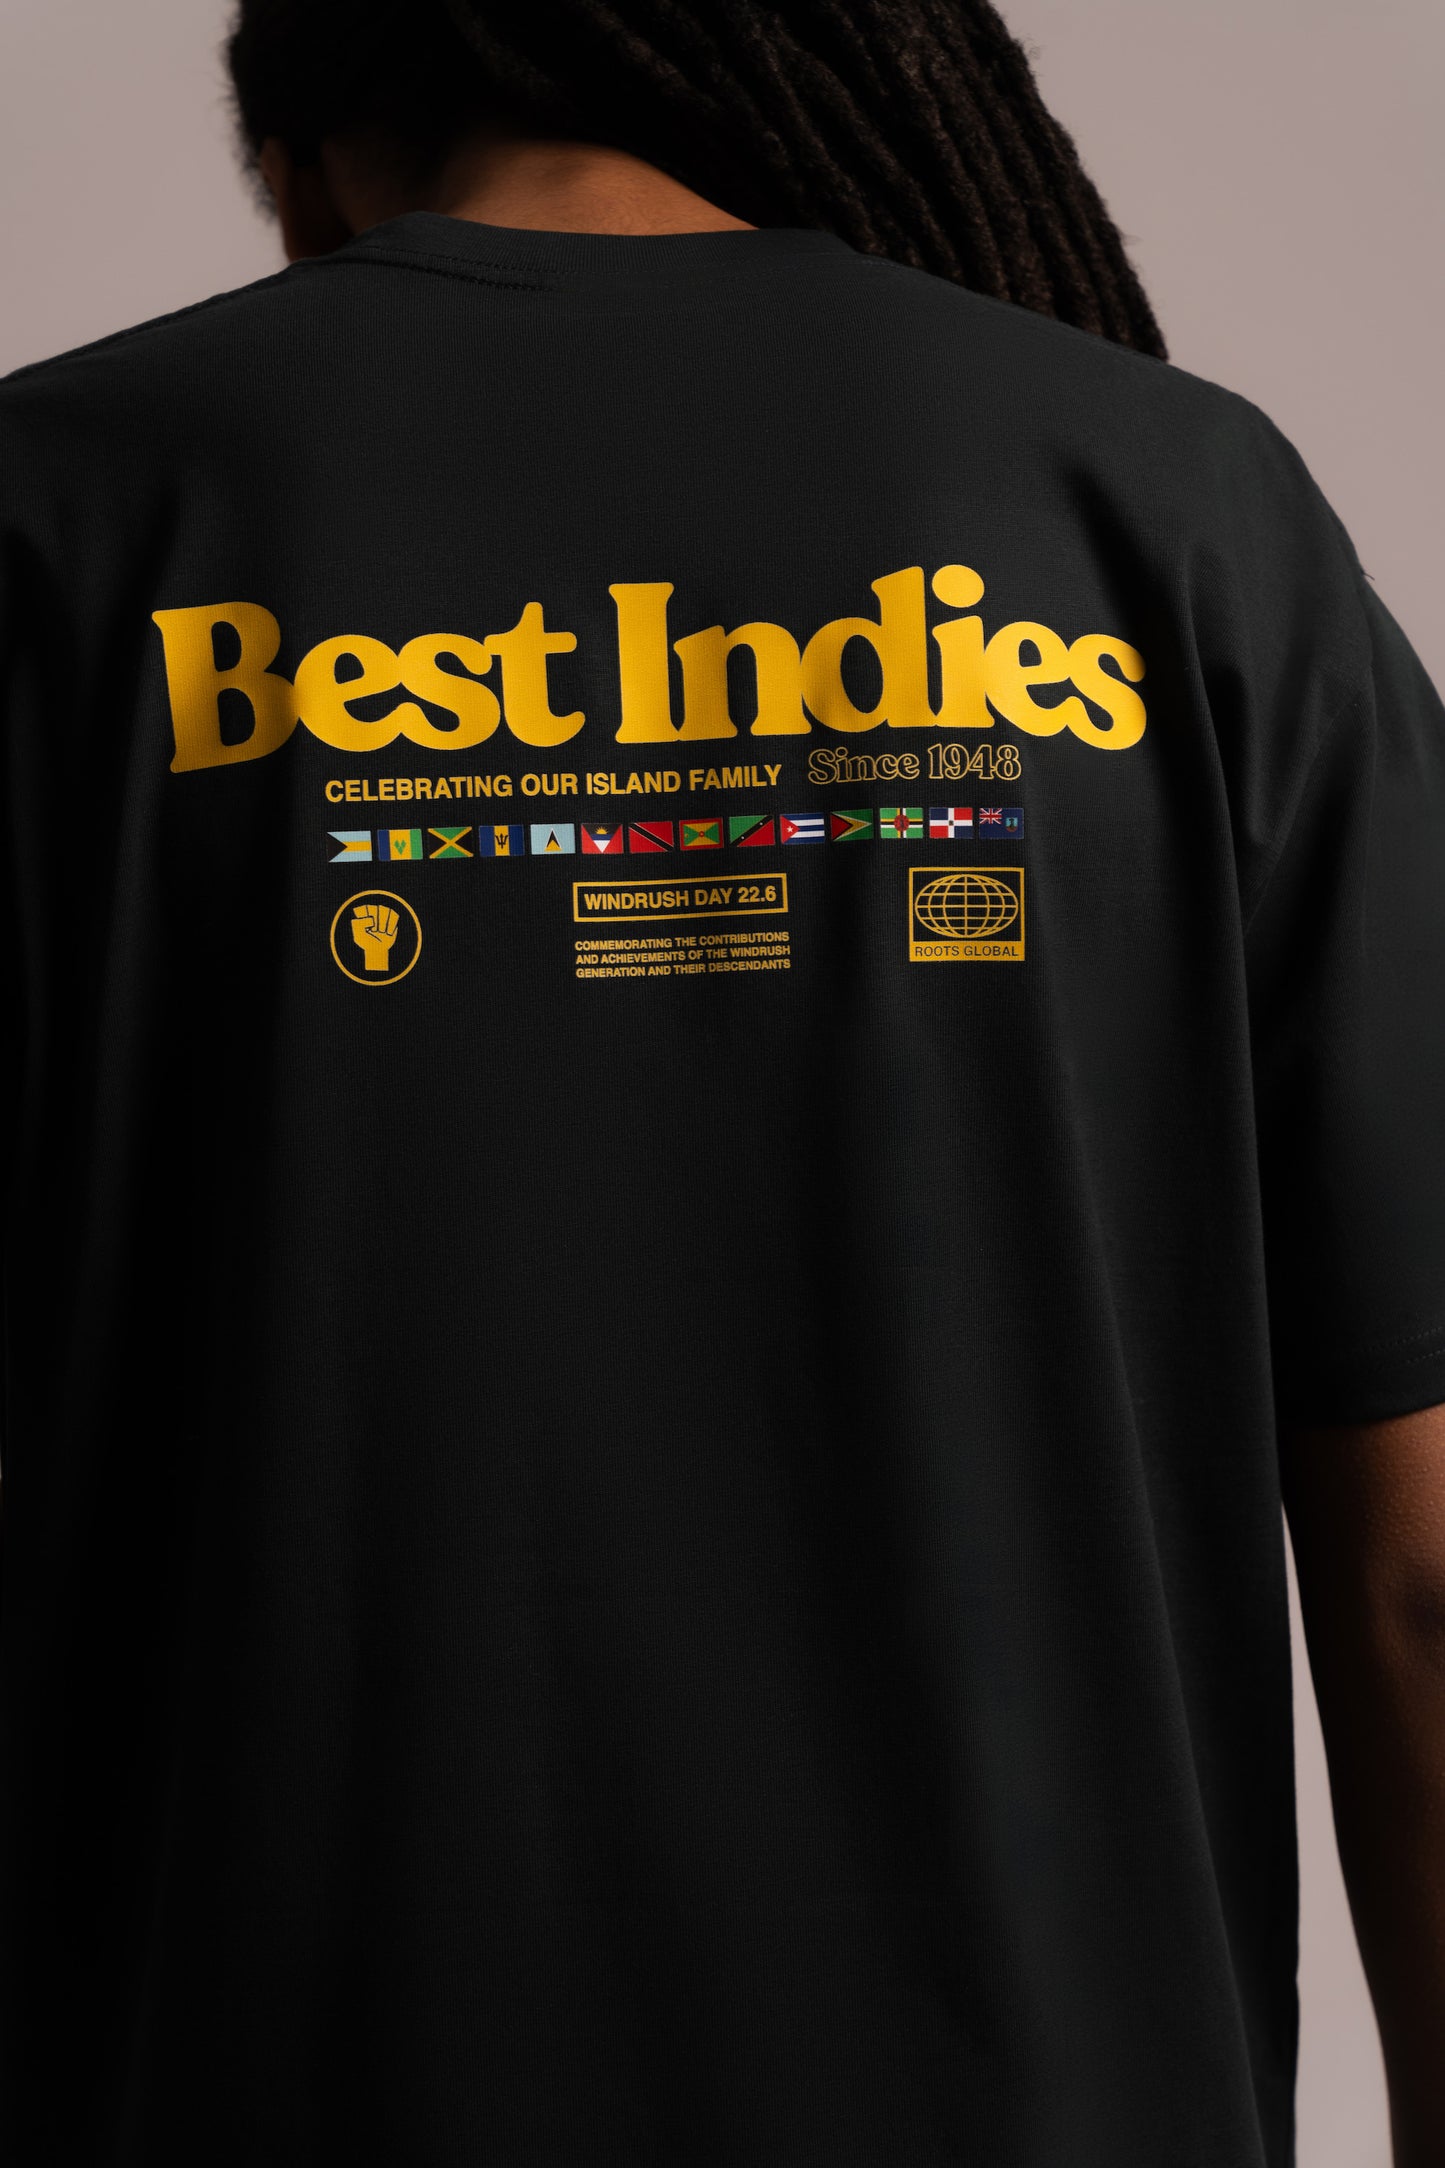 Best Indies - Pine Green T-Shirt